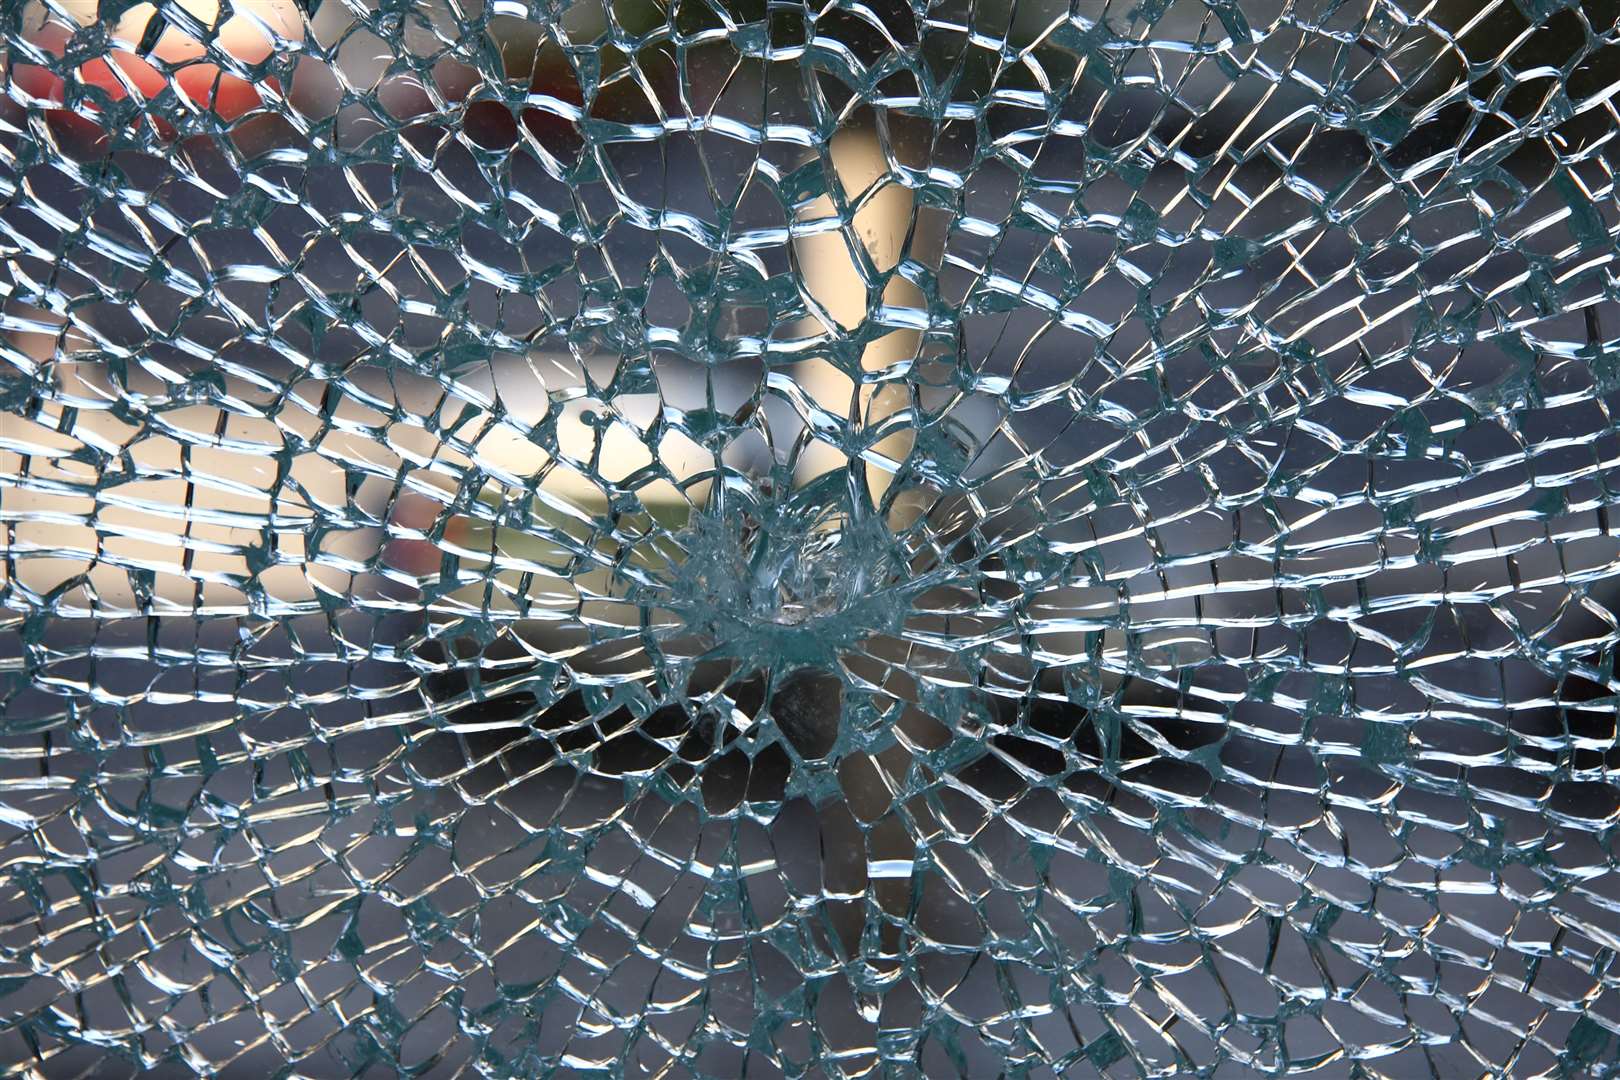 12 car windscreens were damaged in New Street, Lydd, in a single day